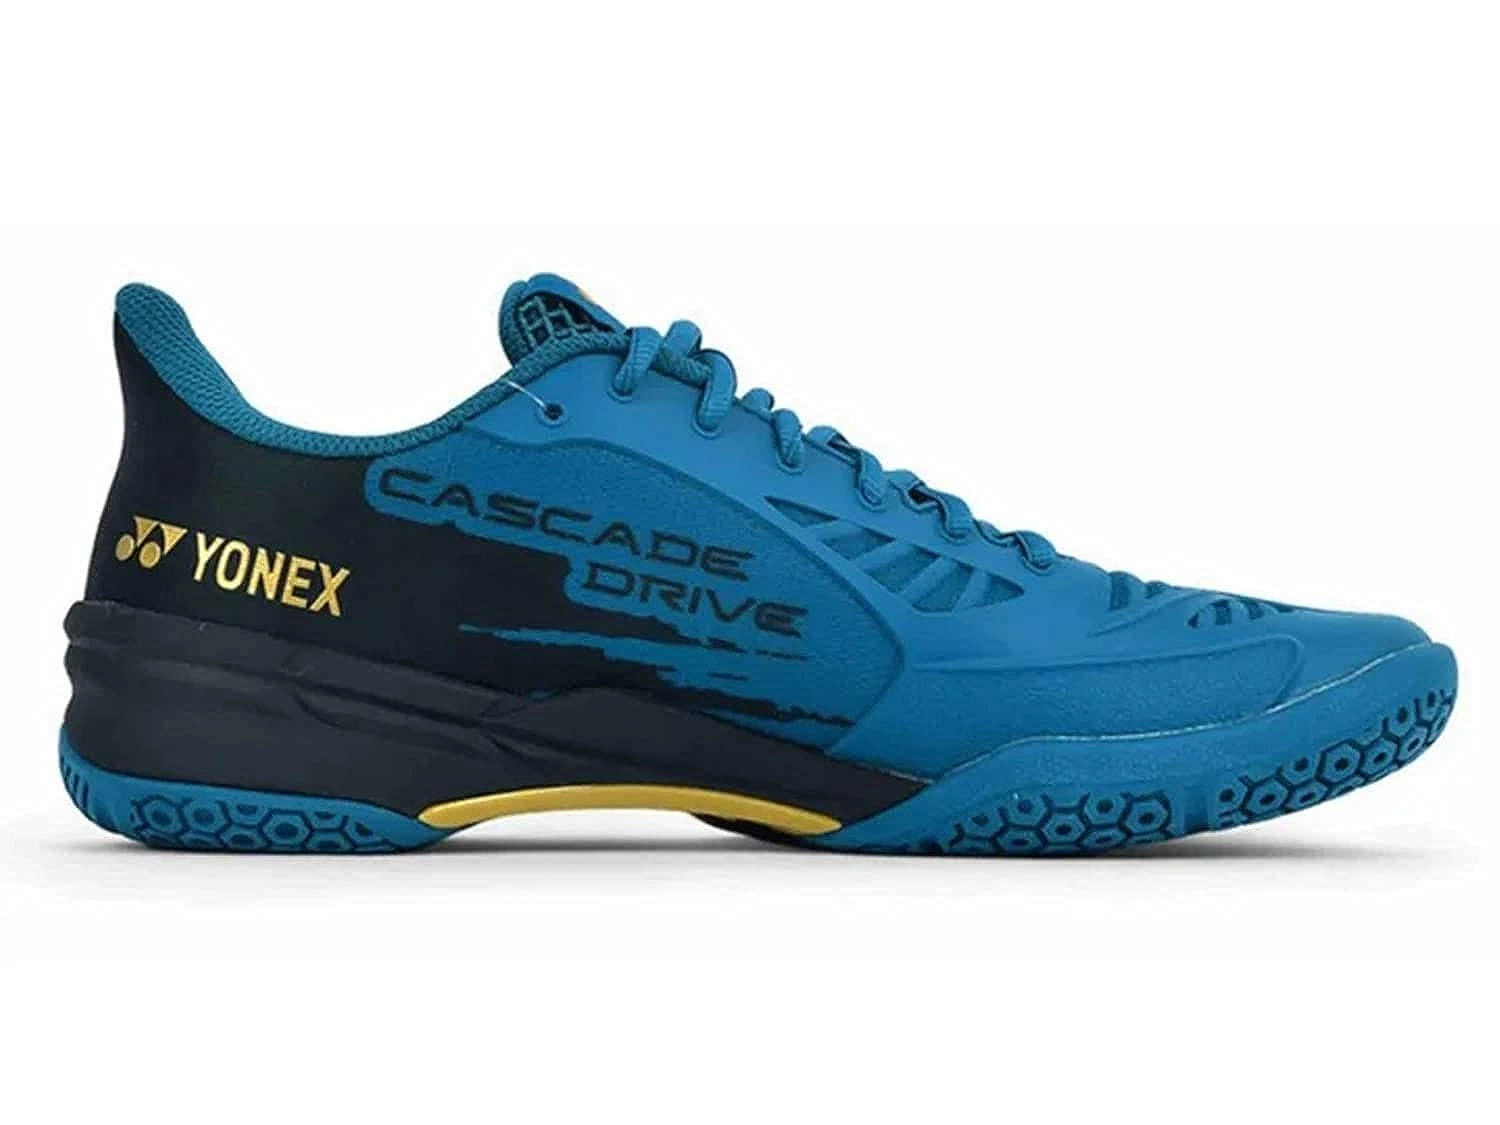 Yonex Power Cushion Cascade Drive Badminton Shoes-8-TEAL BLUE-1